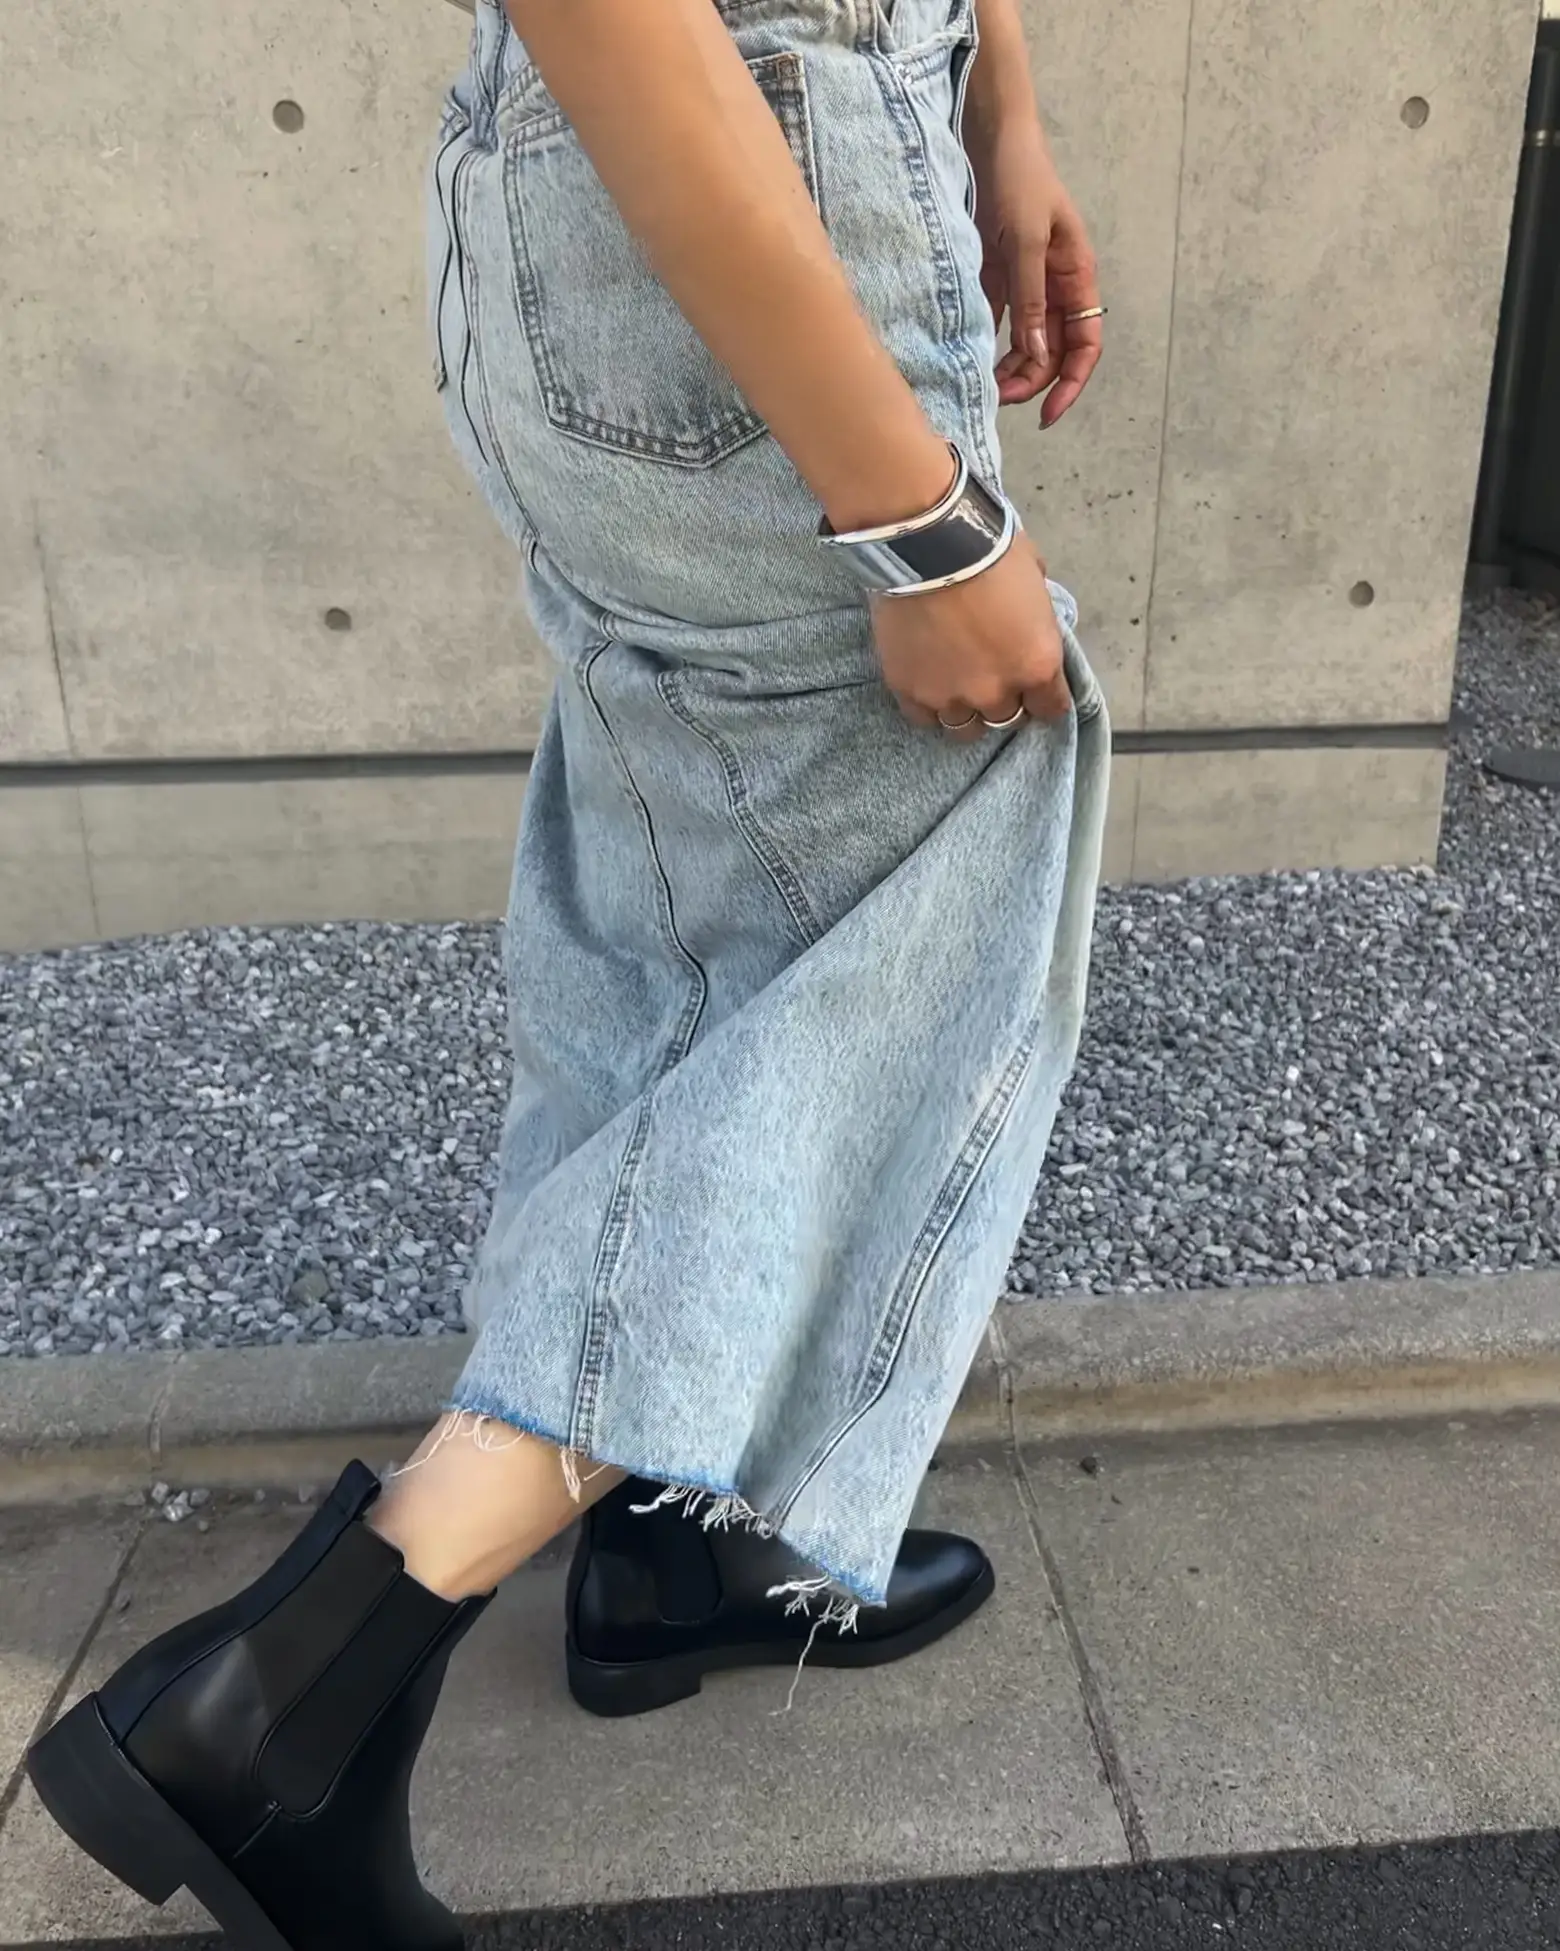 ZARA 】 Design Denim Skirt with Boots 🍂 Autumn | Gallery posted